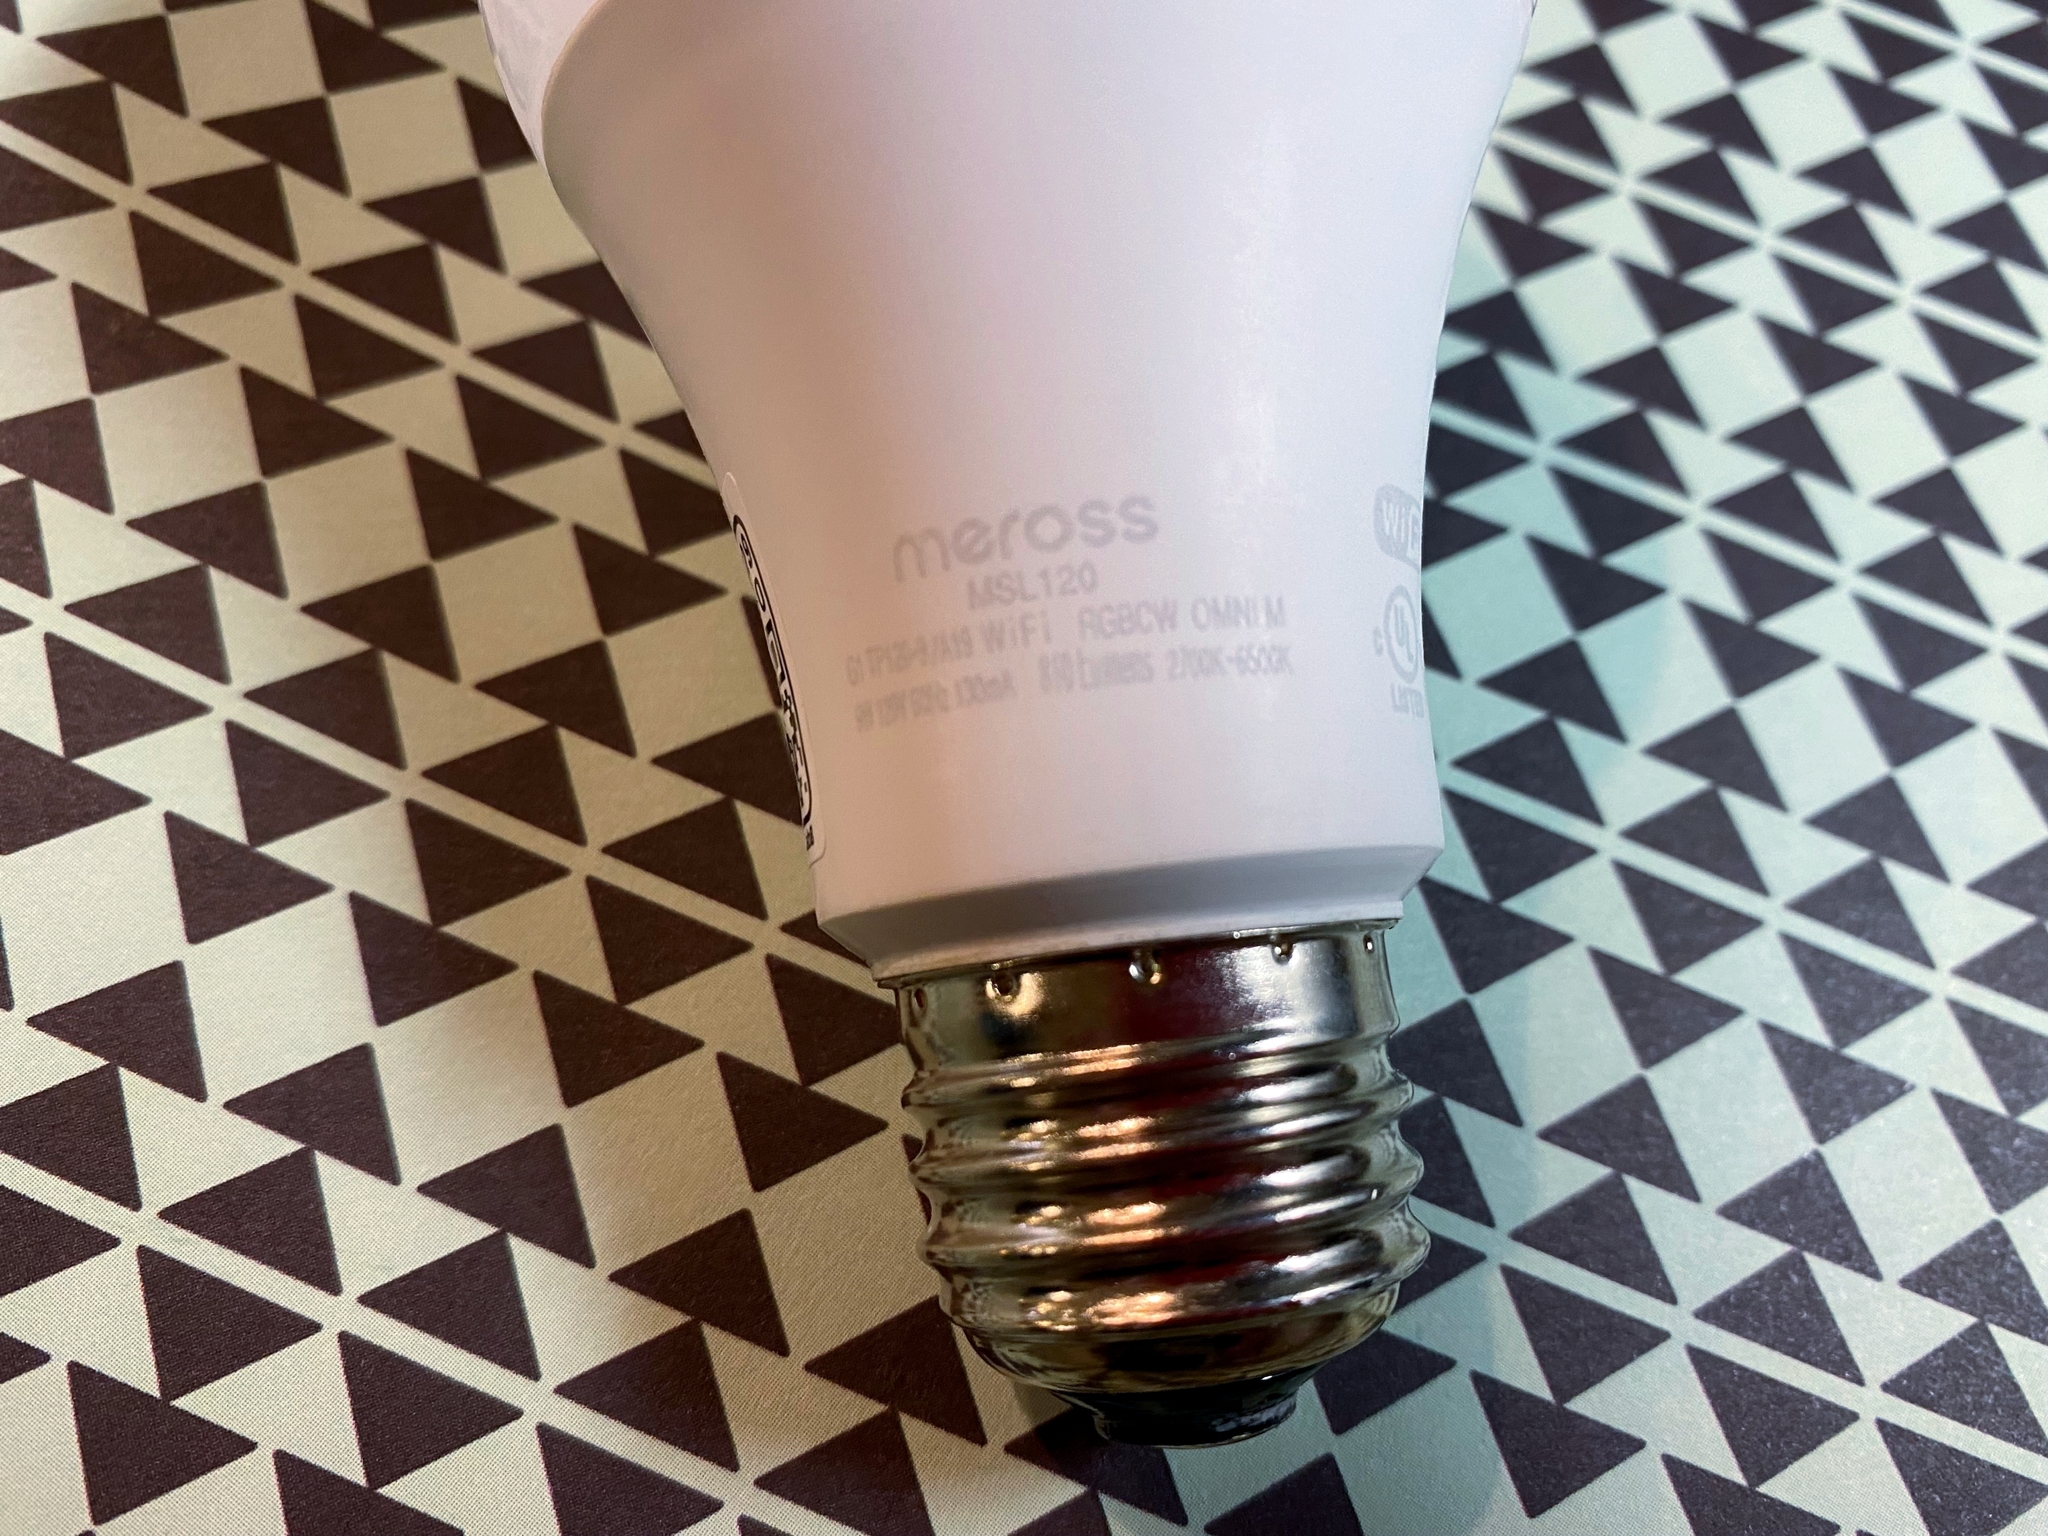 Meross Smart Wifi Led Bulb Review End